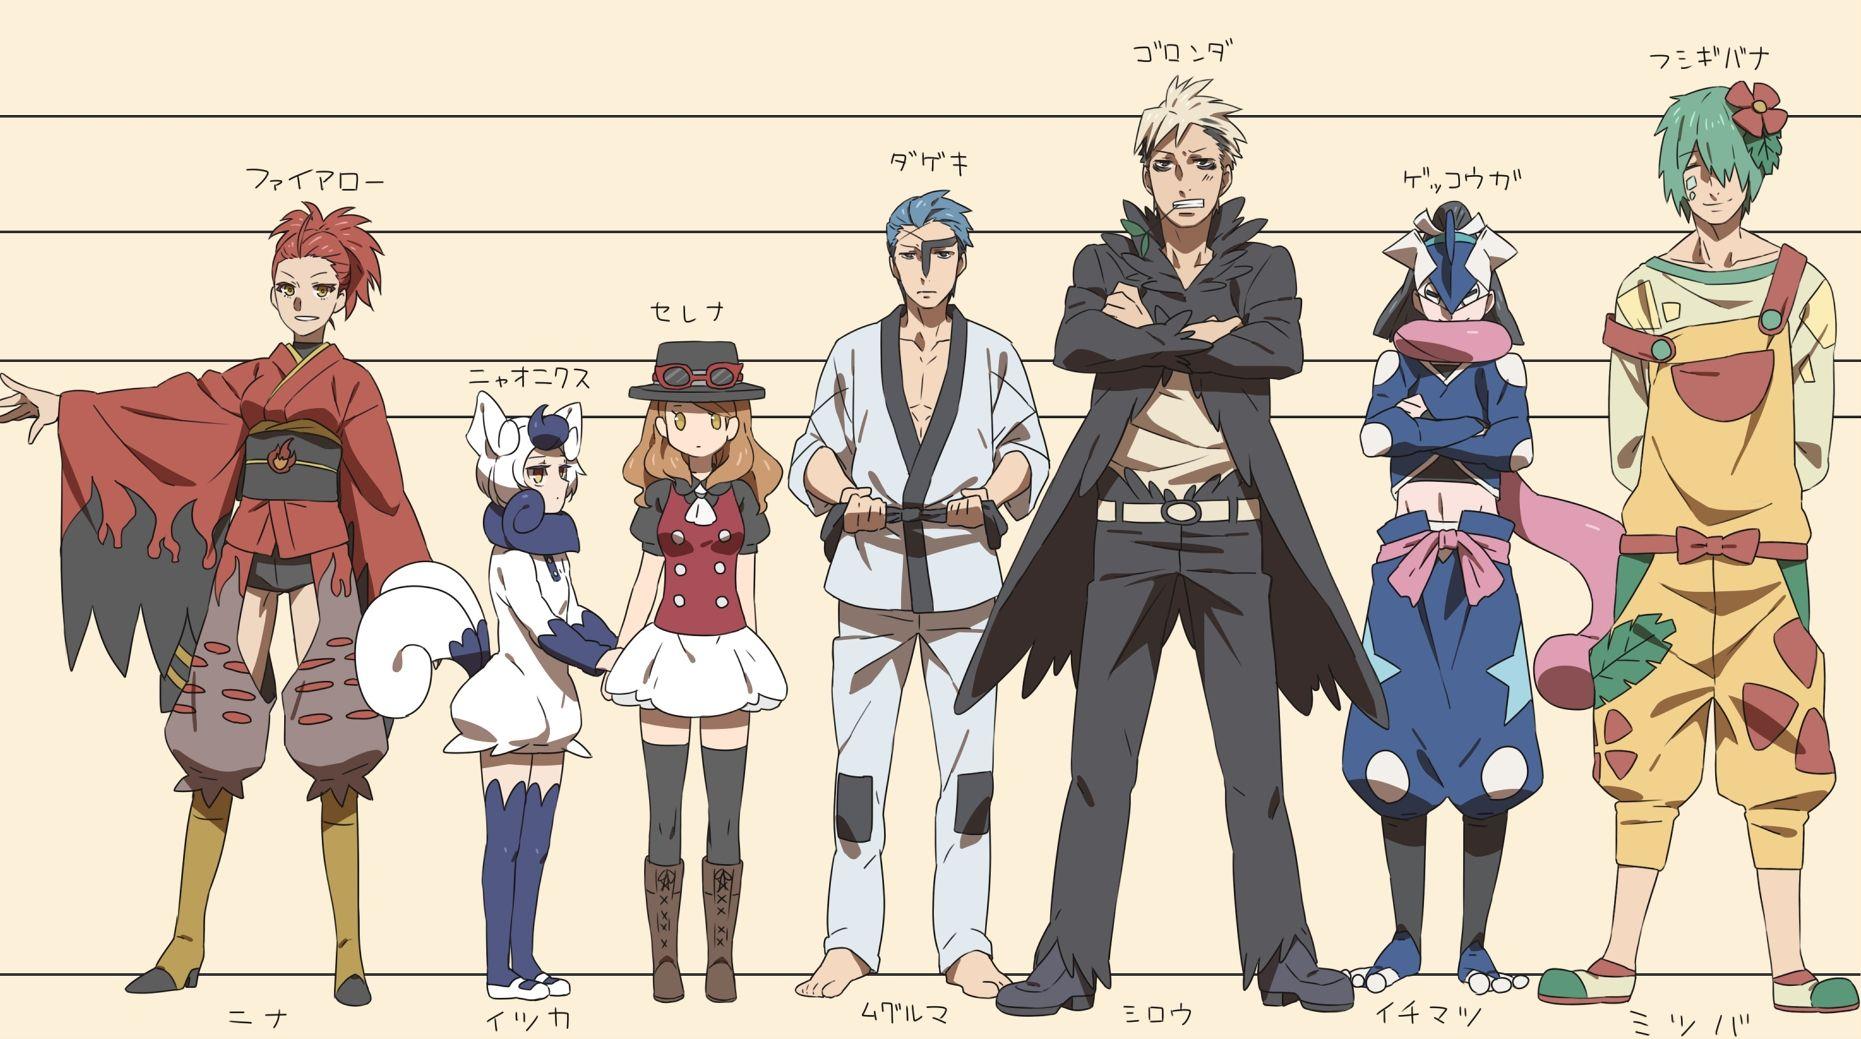 Meowsticémon Anime Image Board